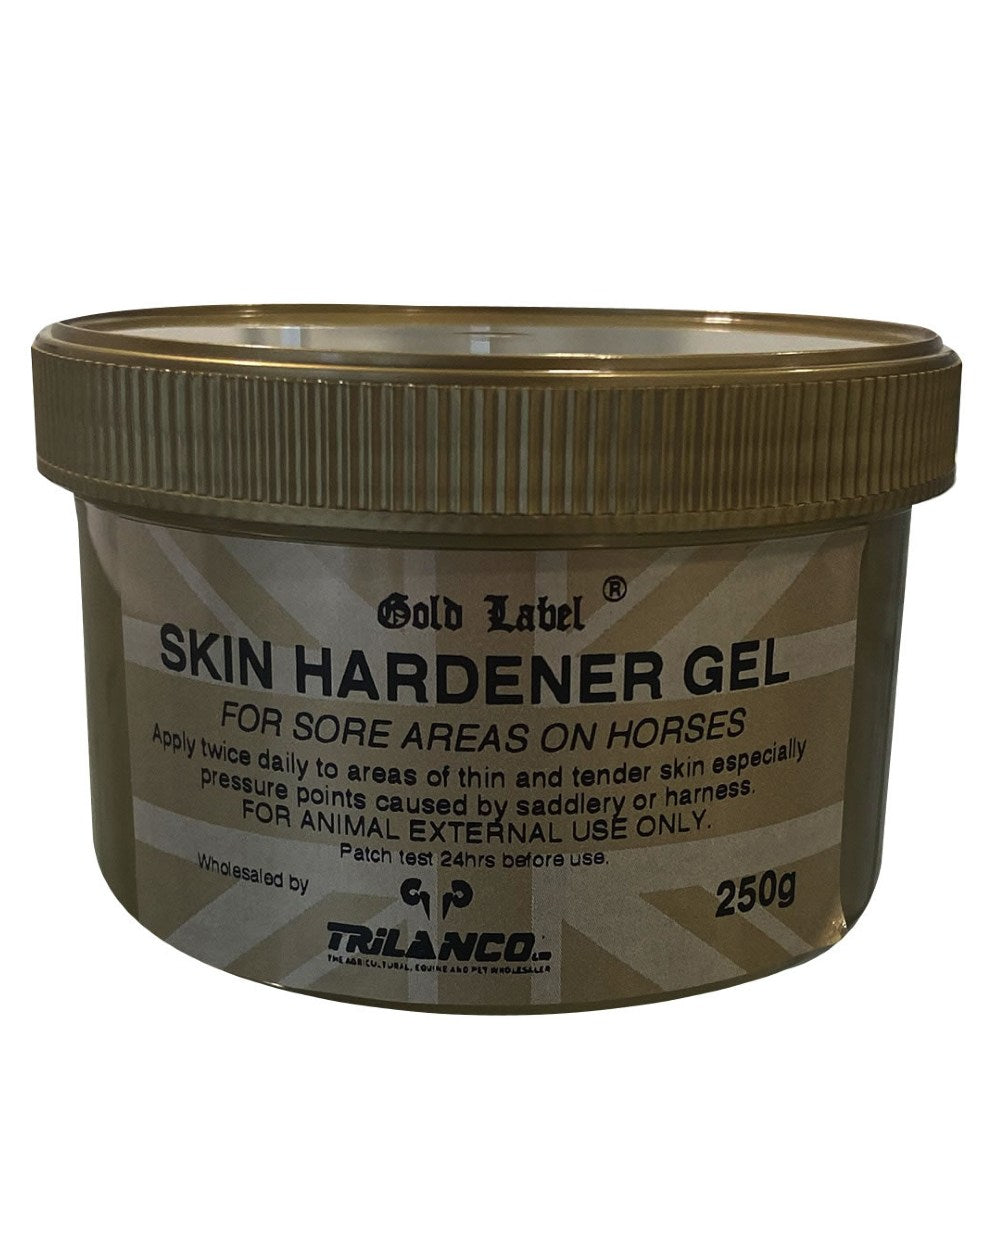 Gold Label Skin Hardener Gel On A White Background